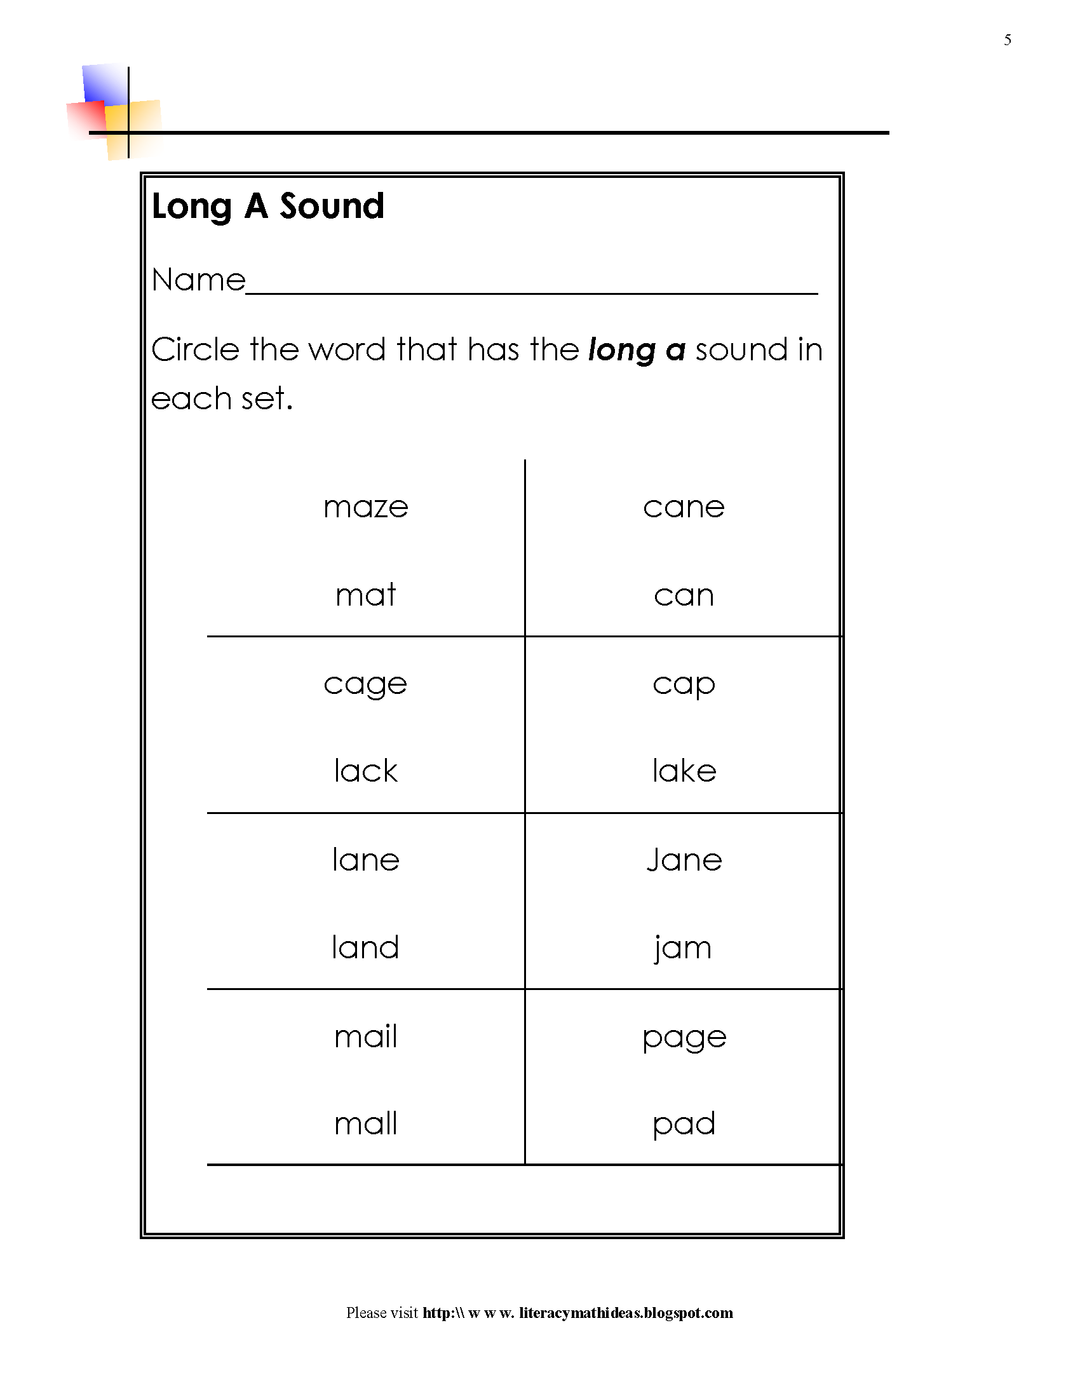 Long Vowel Practice Worksheets